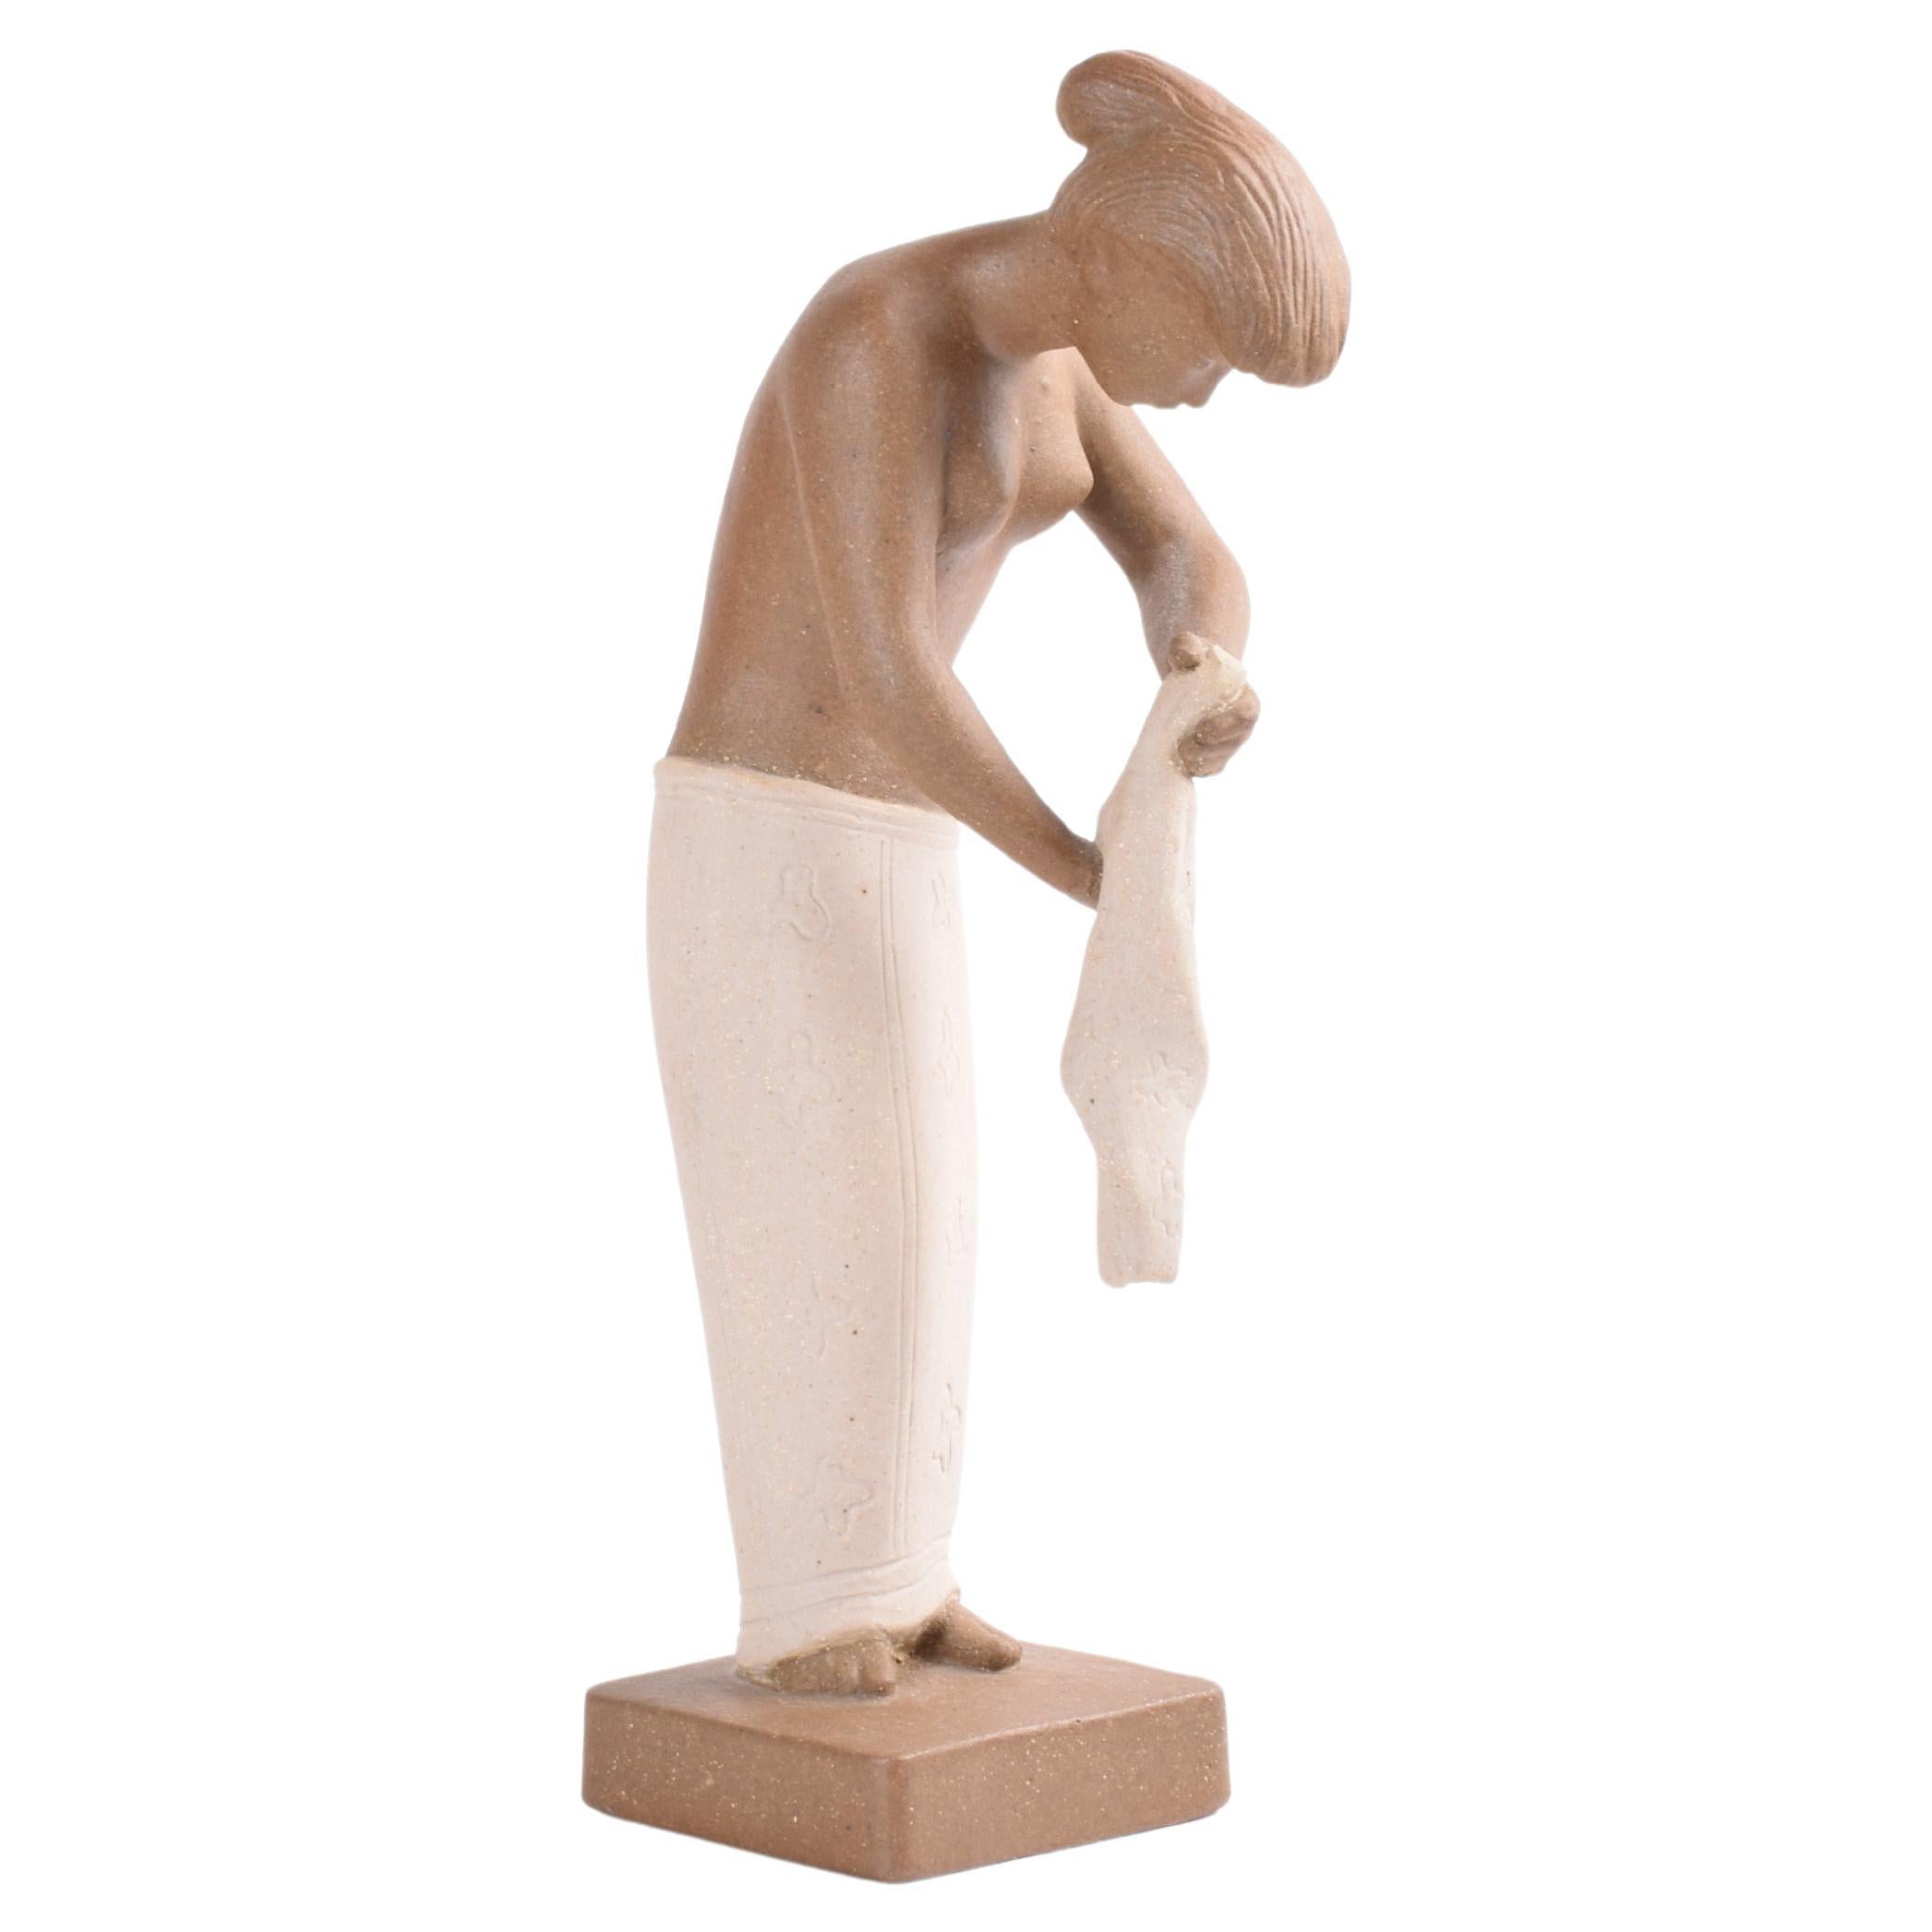 Johannes Hedegaard for Royal Copenhagen Figurine "Martha" Rare Version 21424